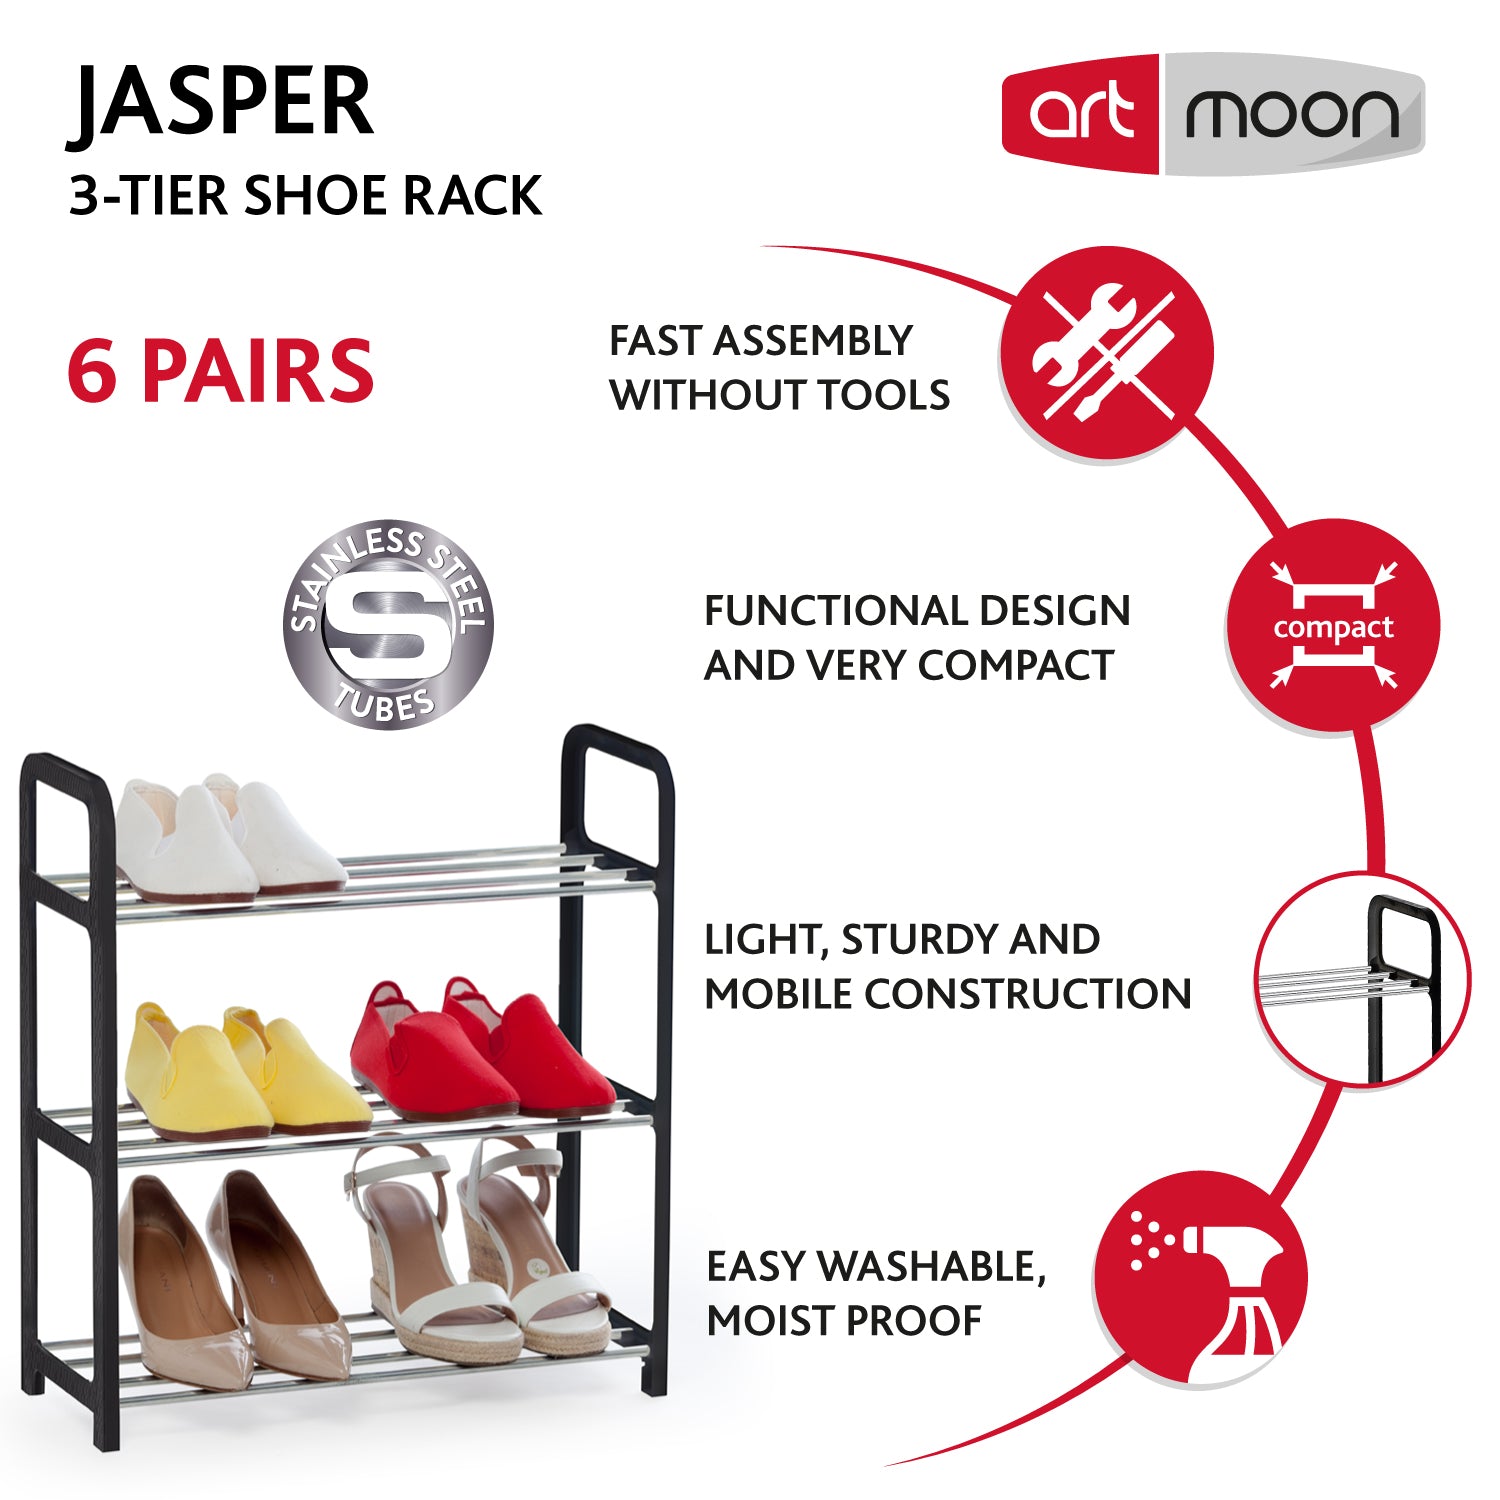 art moon Jasper - Shoe Rack 3 Tier, Rustproof Steel, Black Plastic Rattan Frame